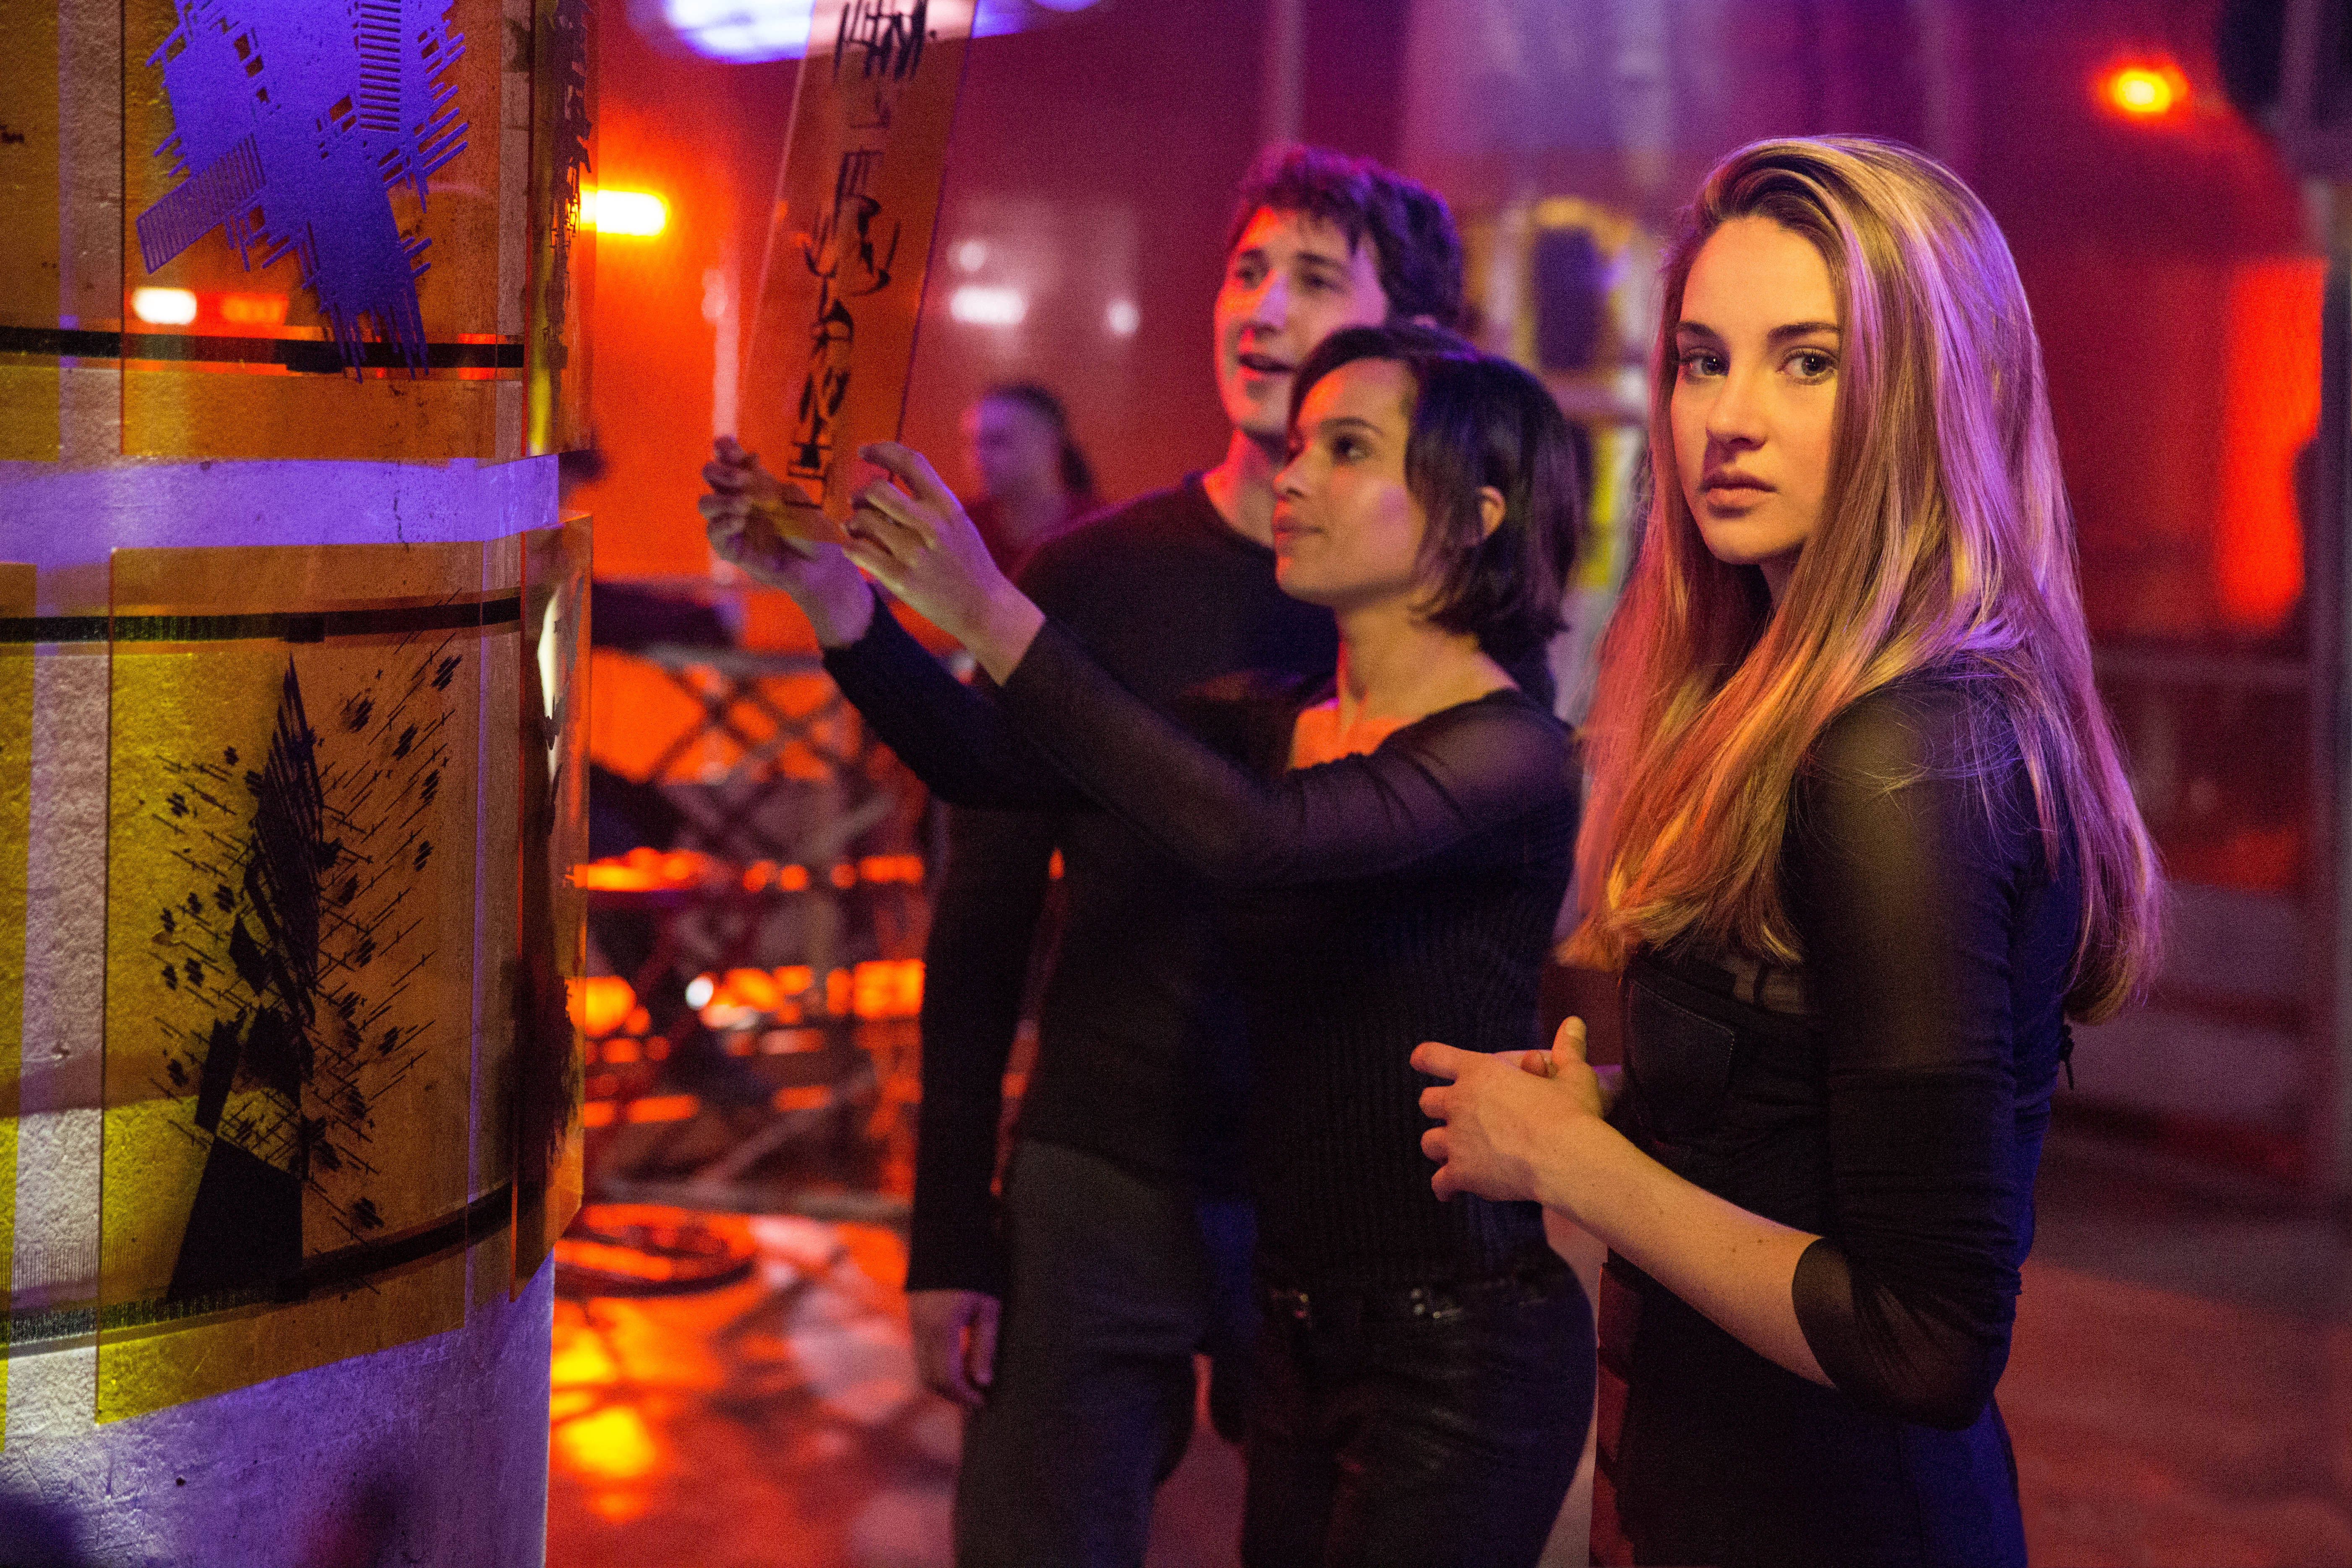 Shailene Woodley, Ben Lloyd-Hughes, and Zoë Kravitz in Divergent (2014)